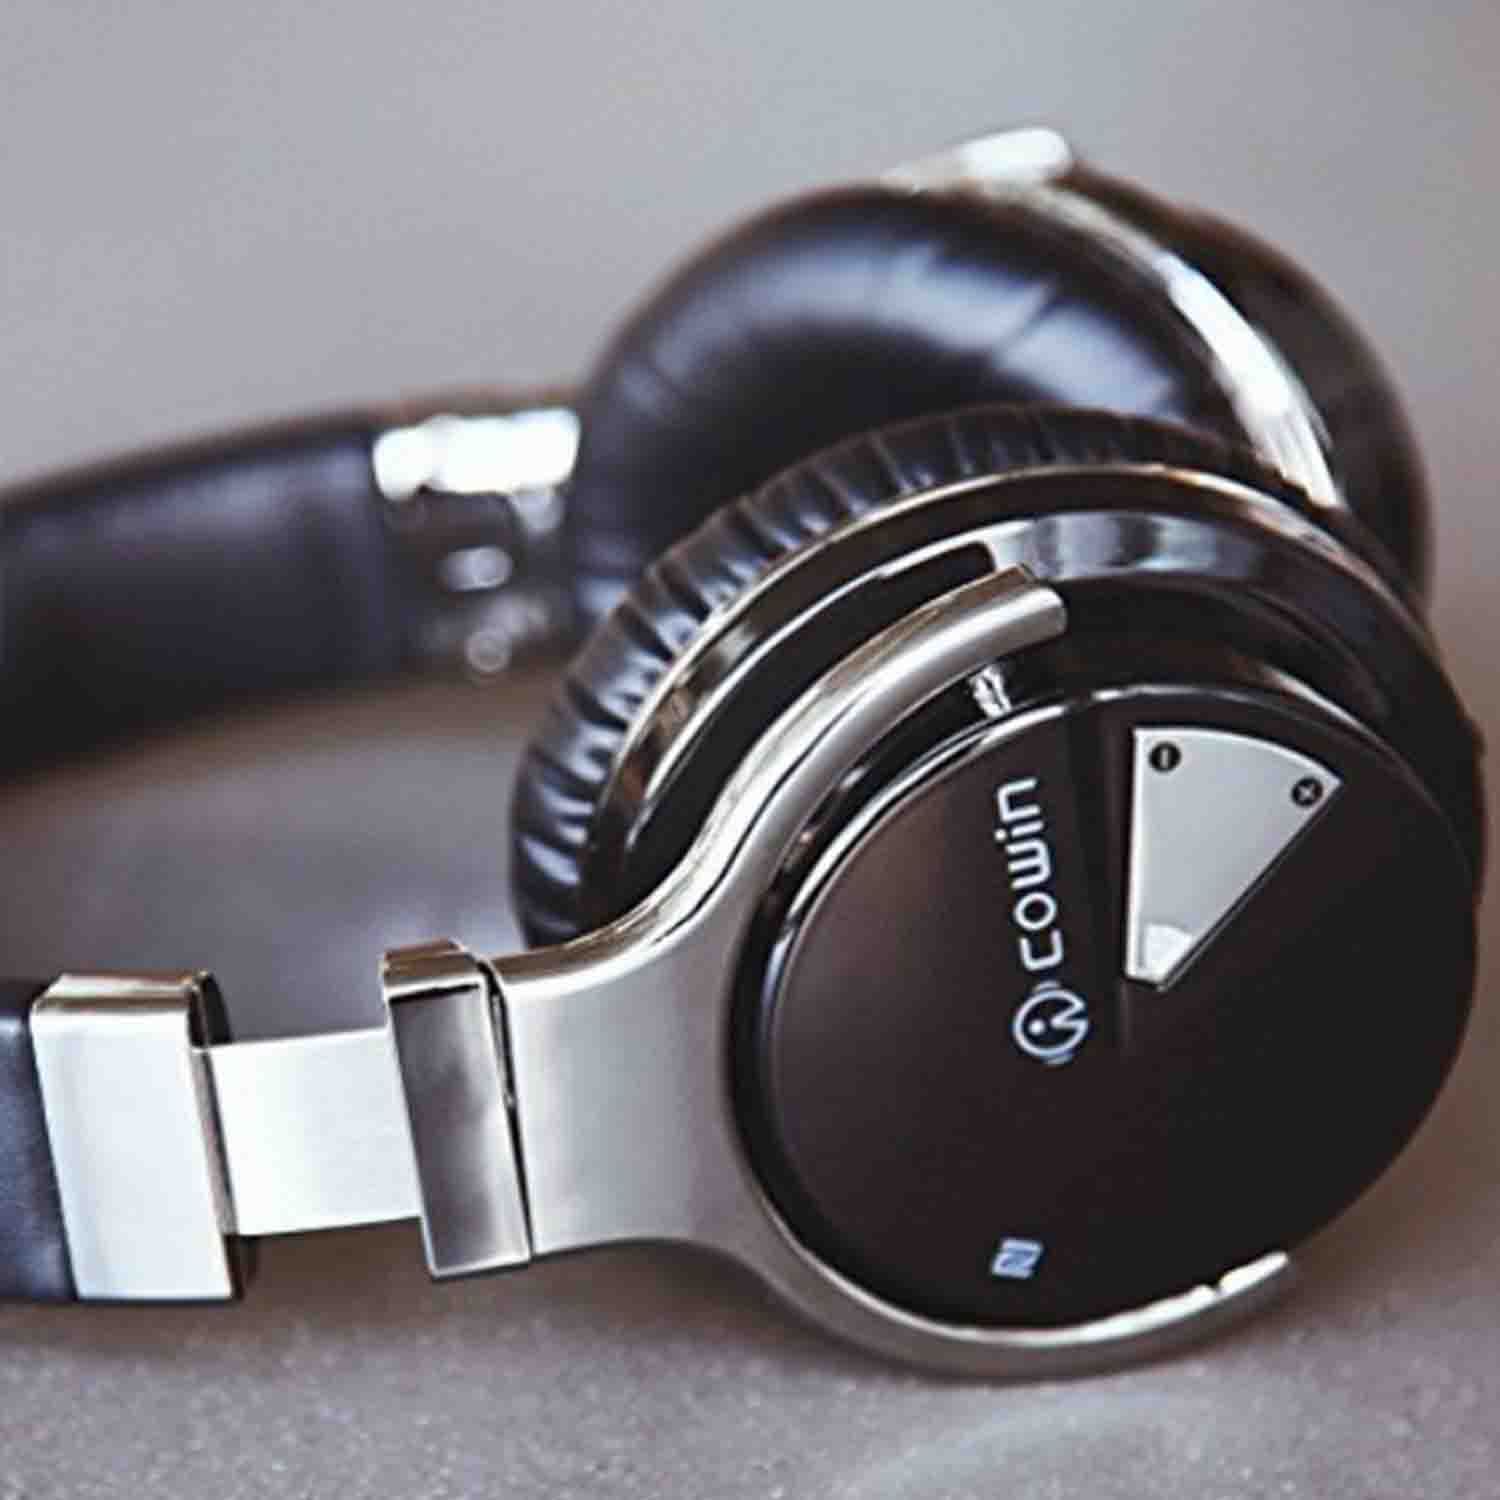 COWIN E7 Pro  Best  Reviewed Noise Cancelling Headphones - Cowinaudio